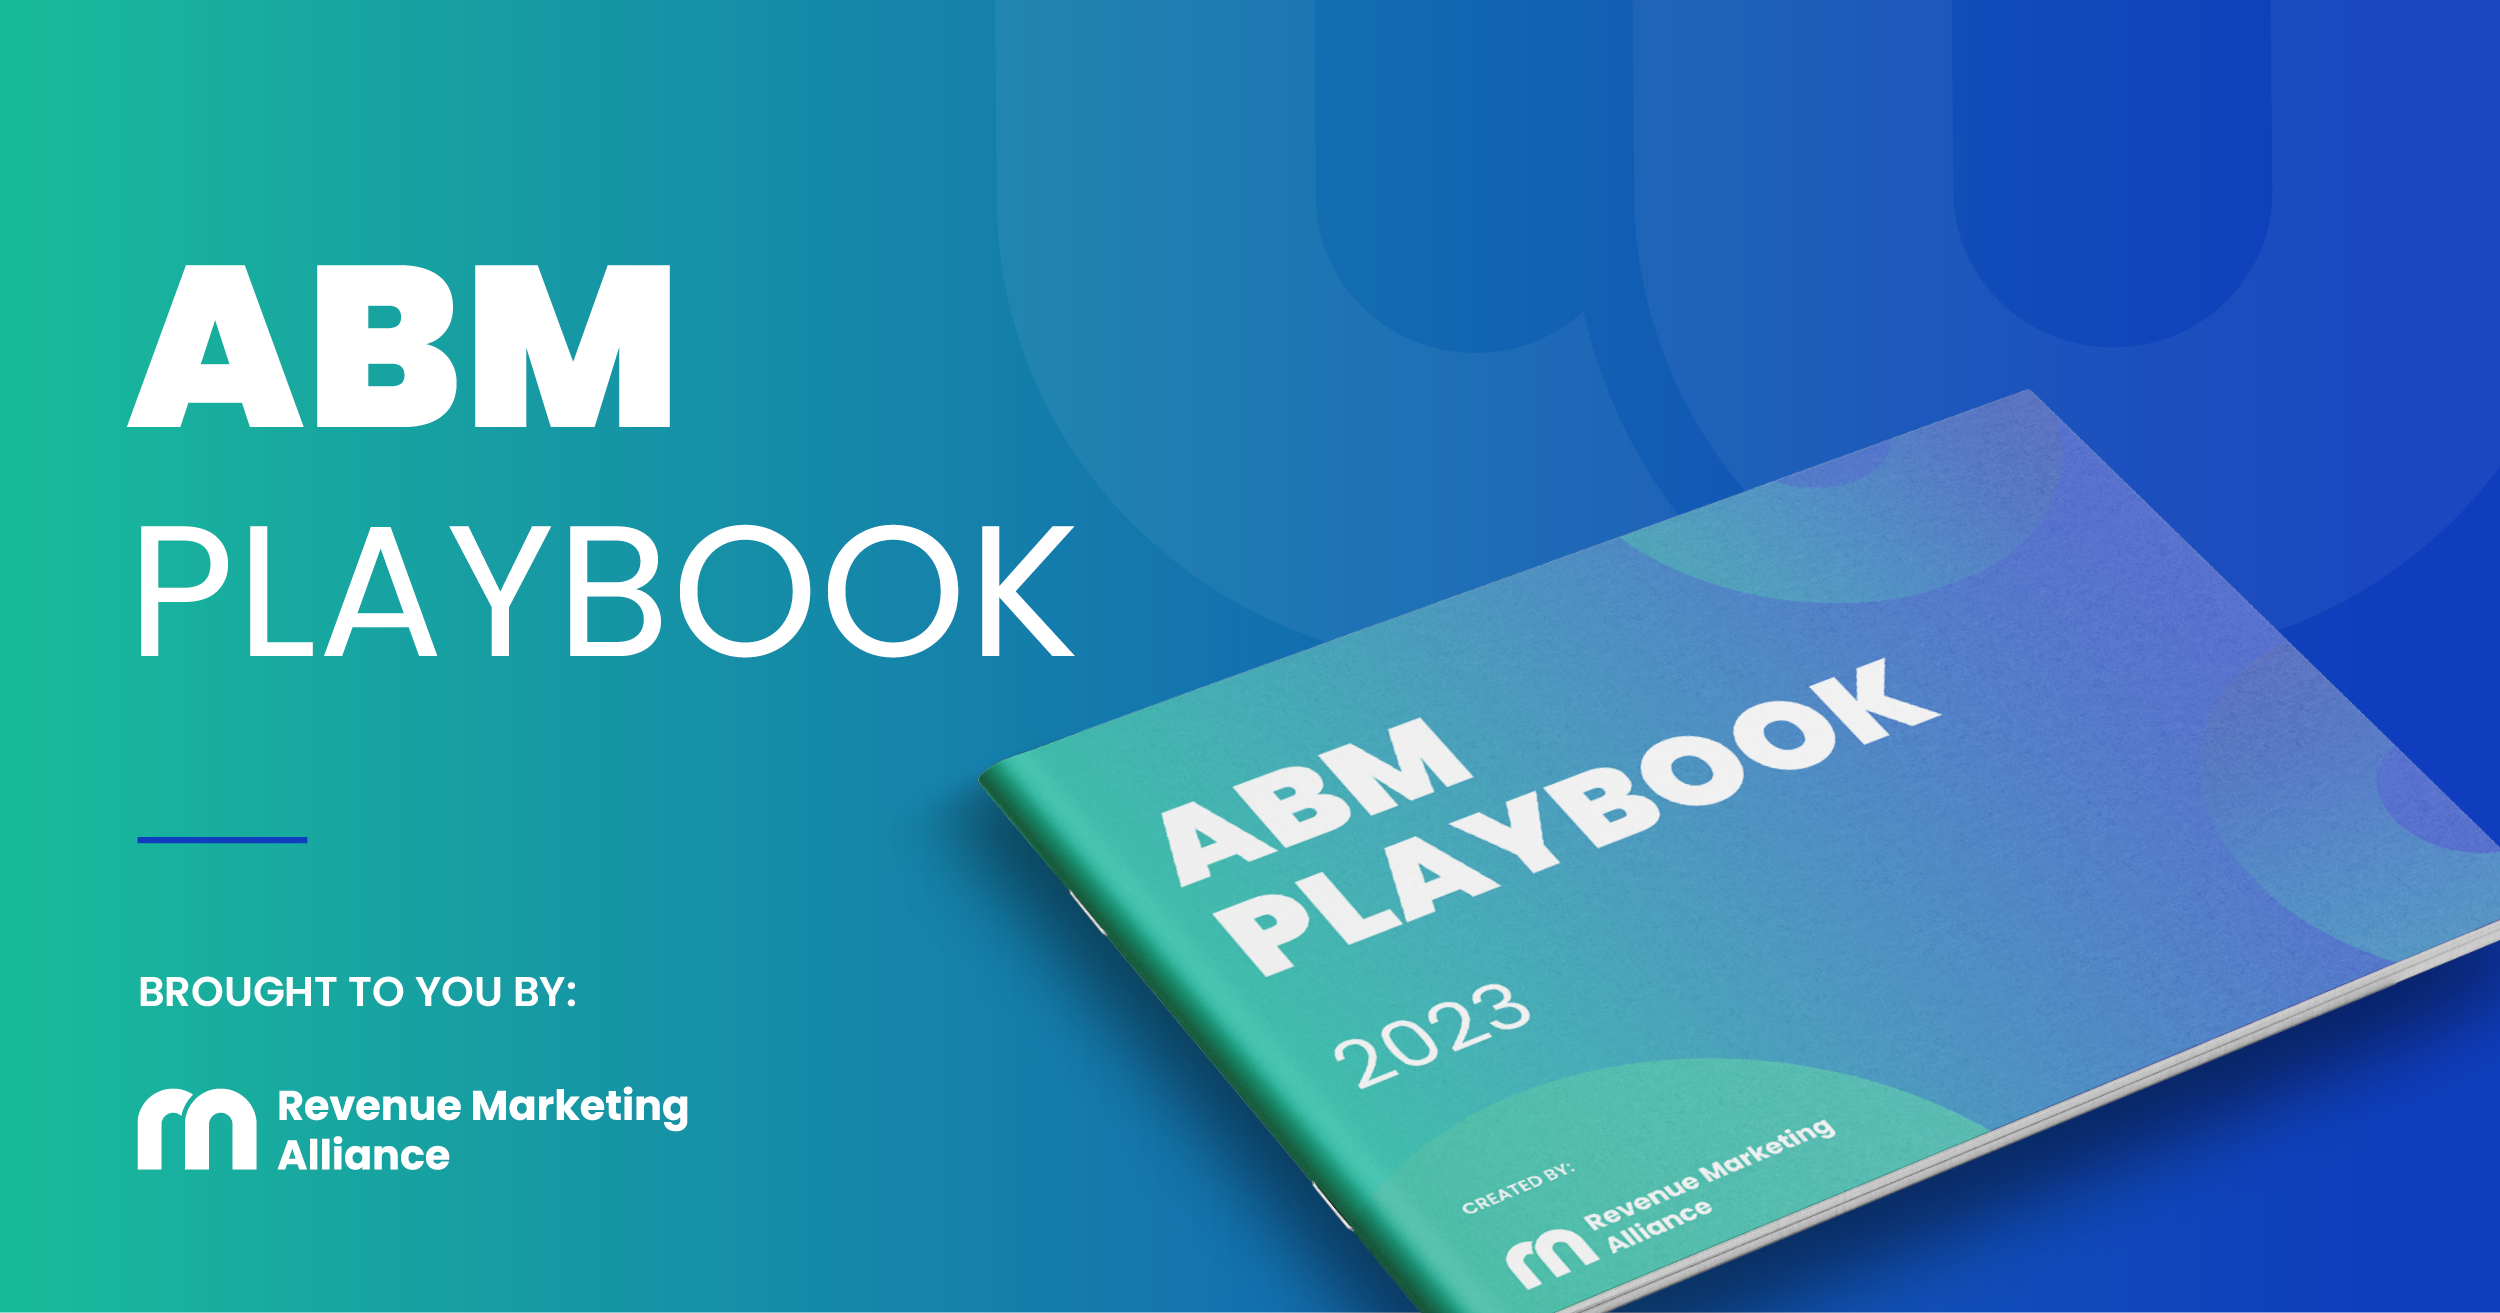 RMA's ABM playbook